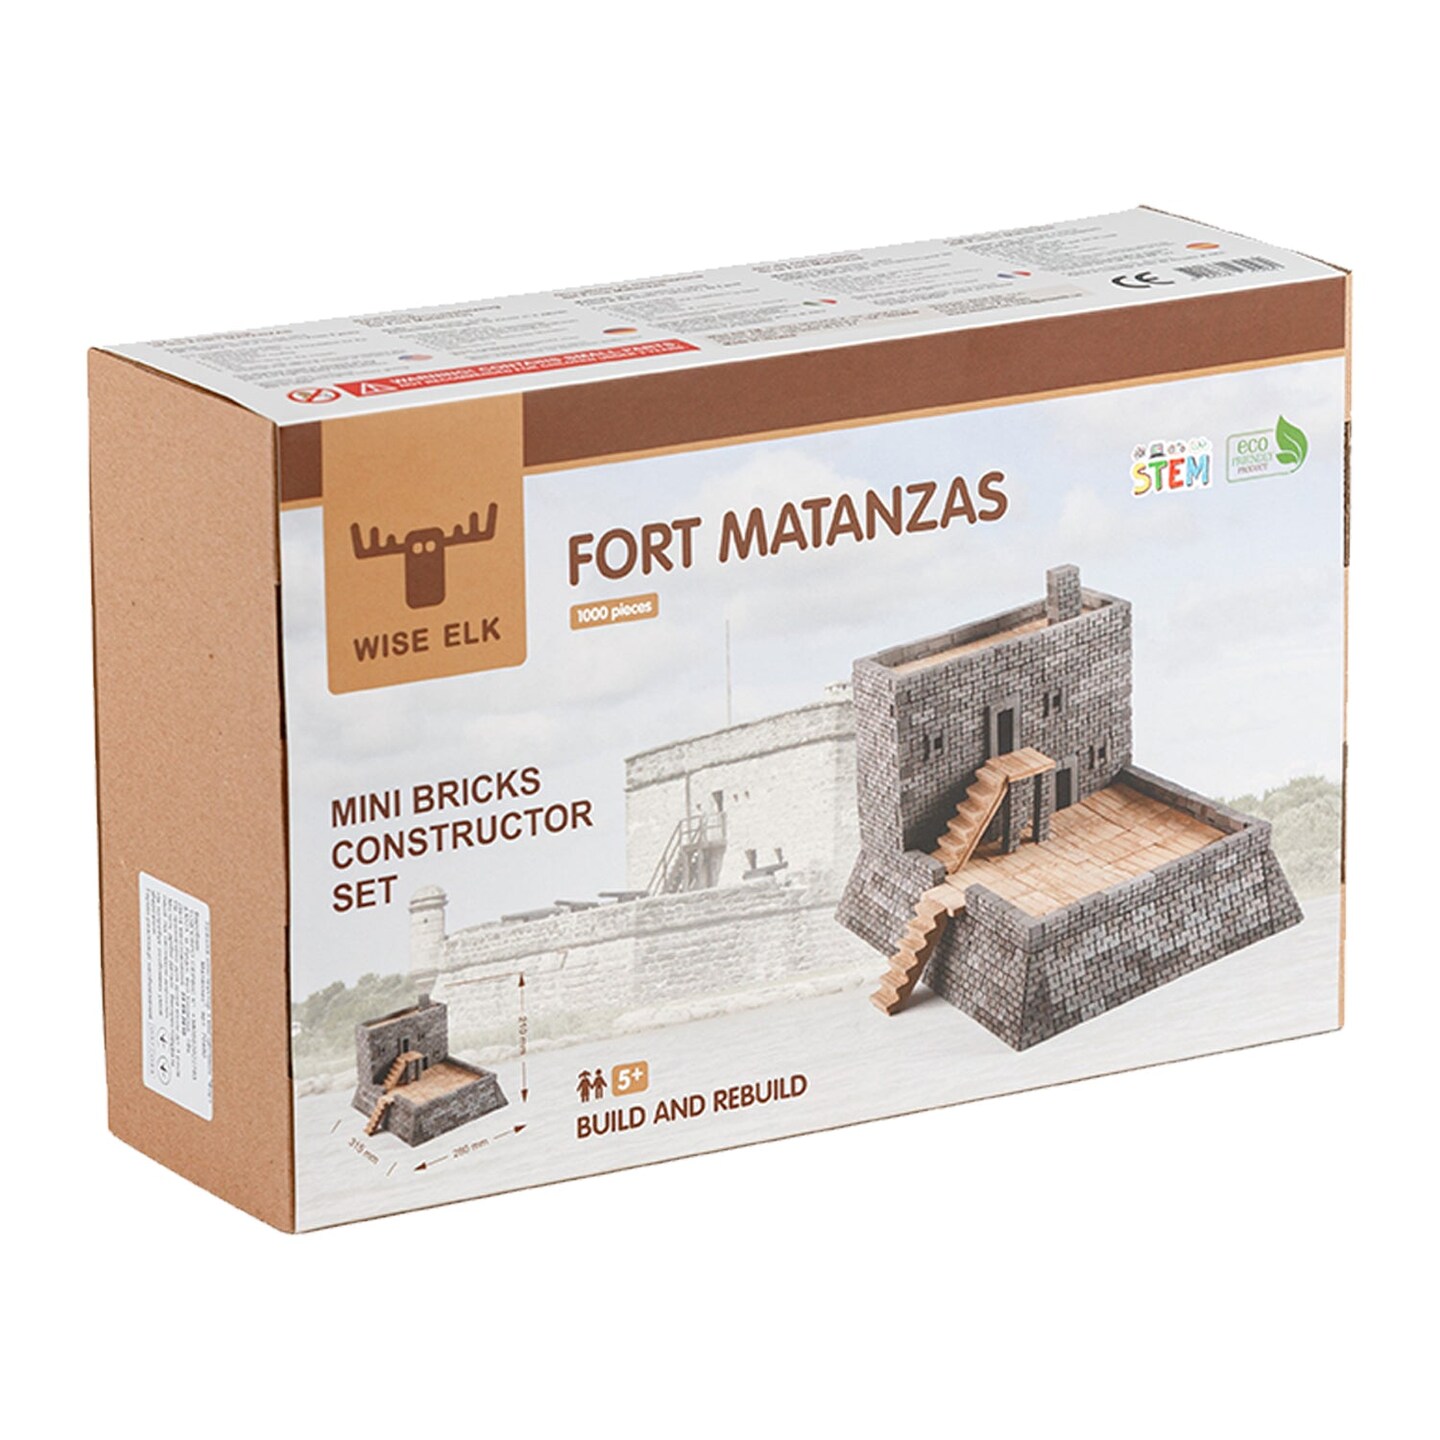 Mini Bricks Construction Set - Fort Matanzas